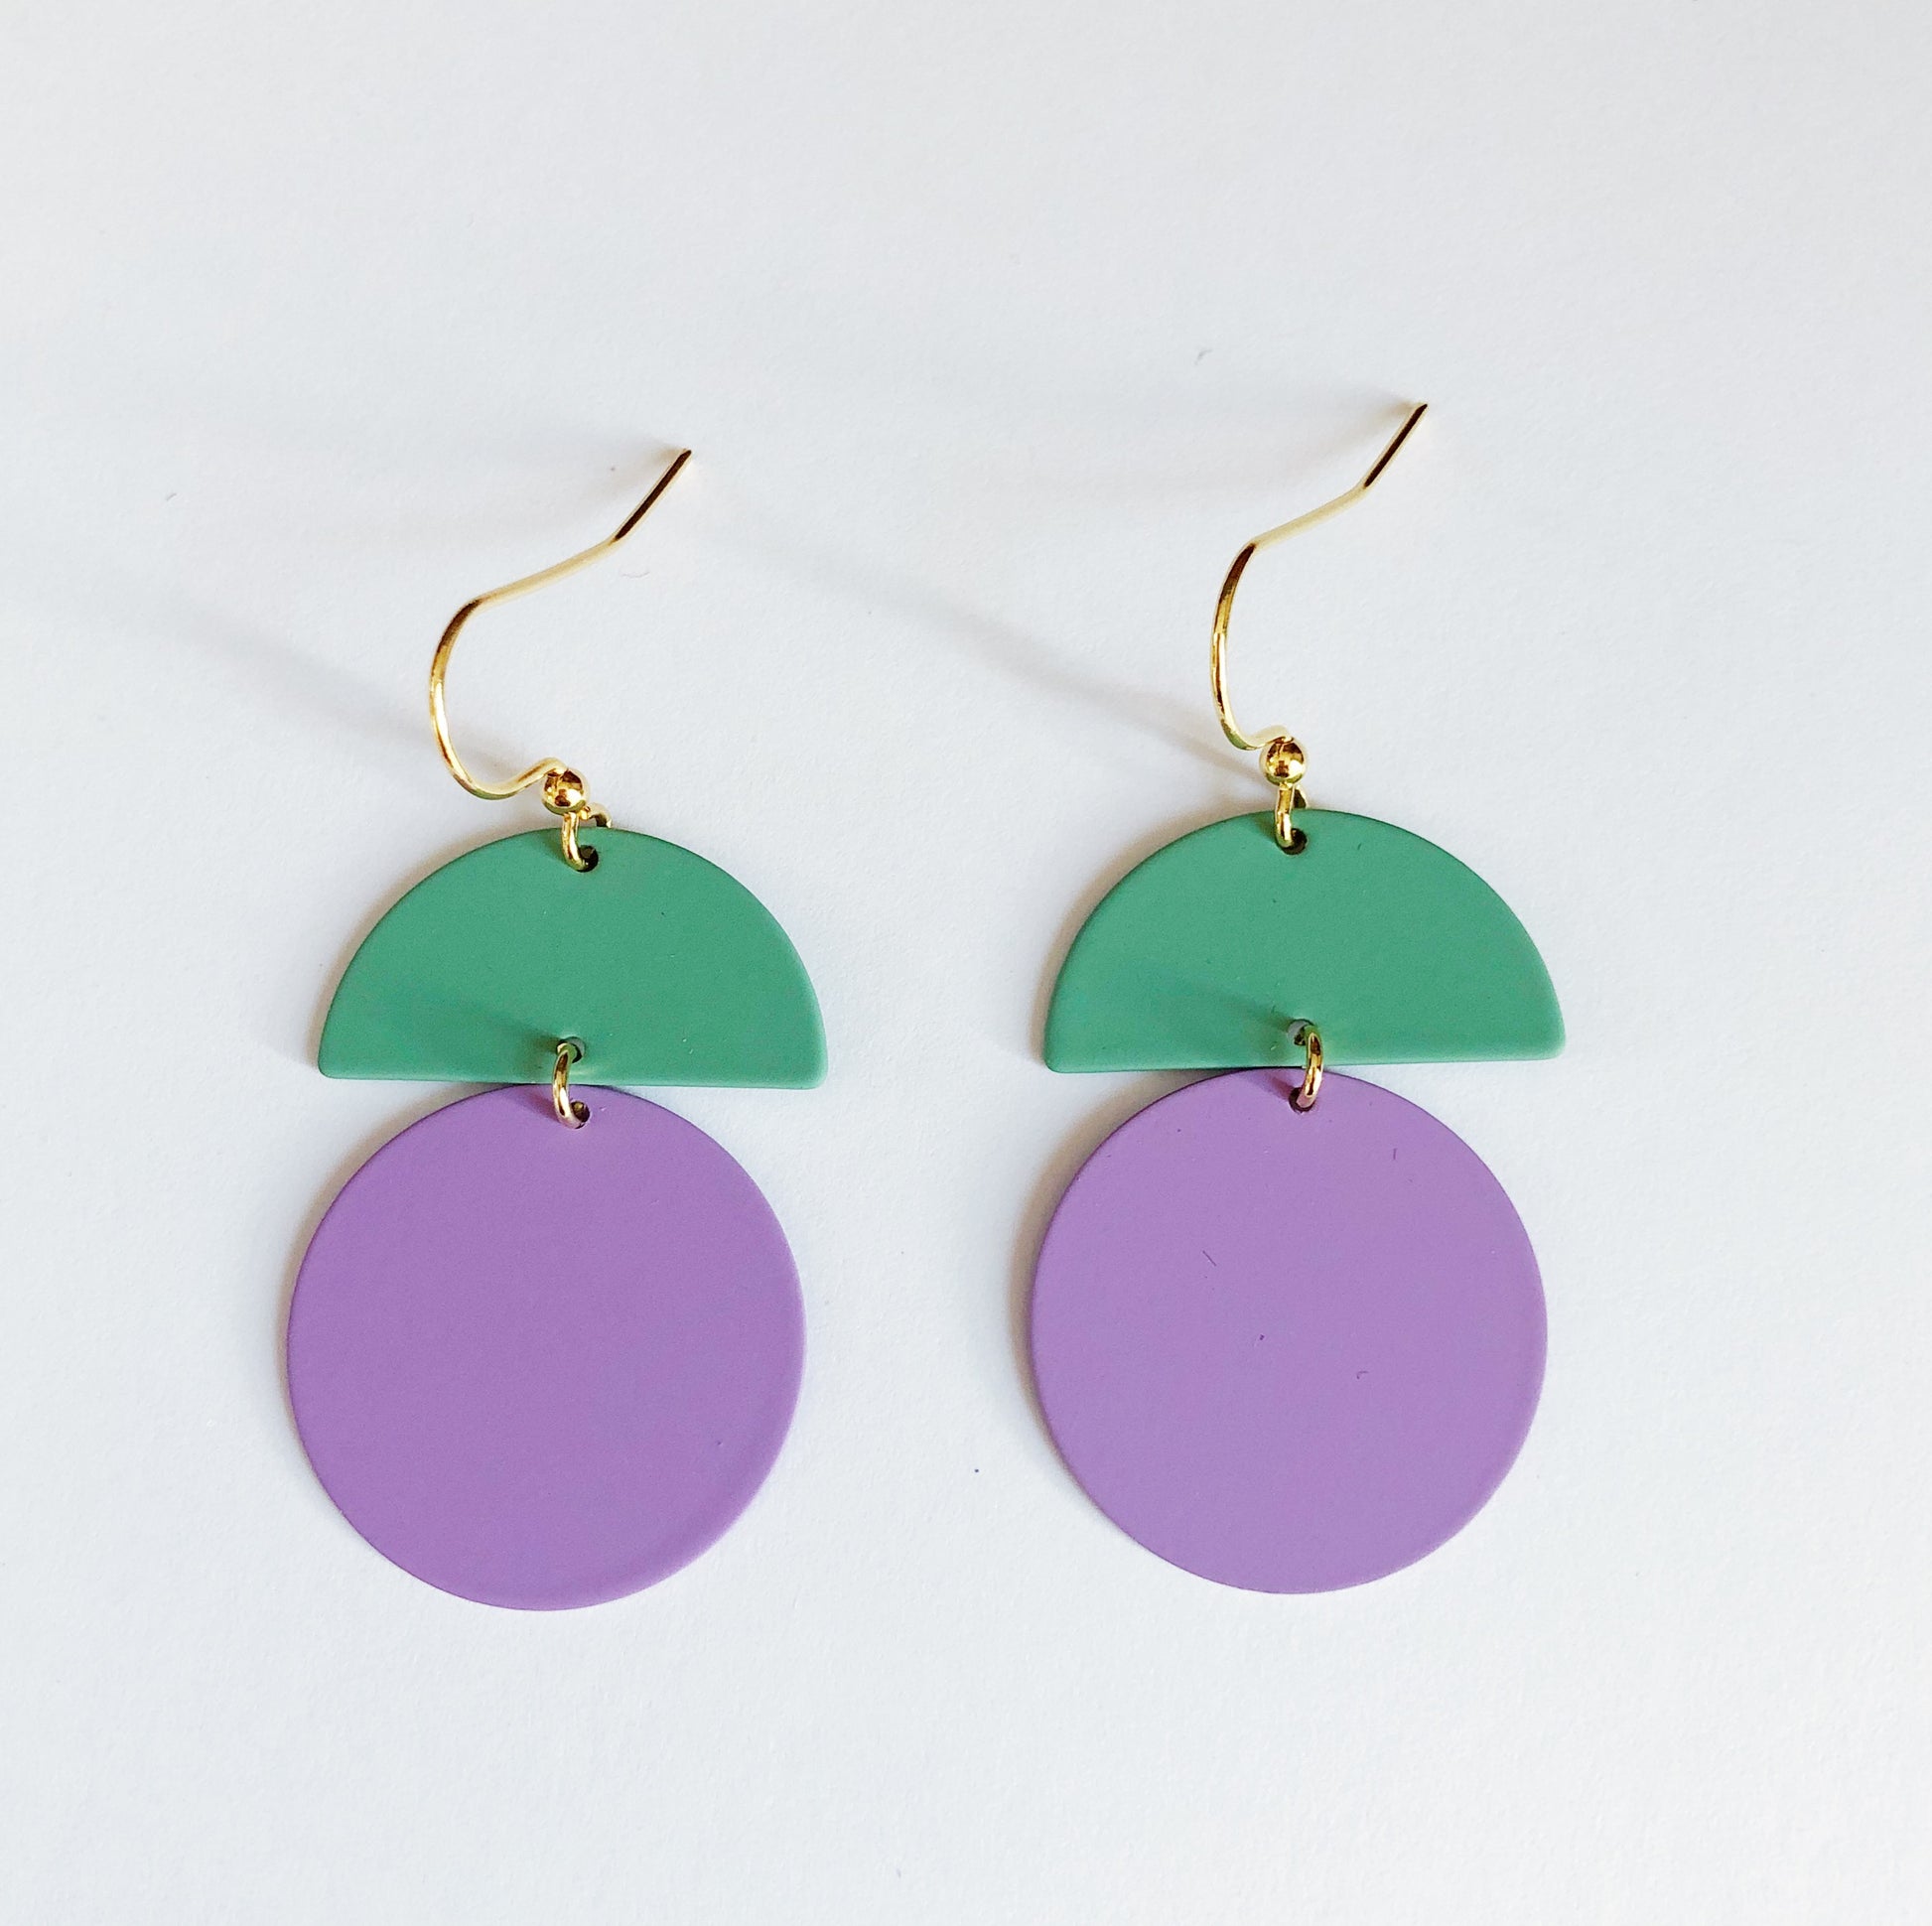 Jack & Freda Orla earrings - lilac and mint